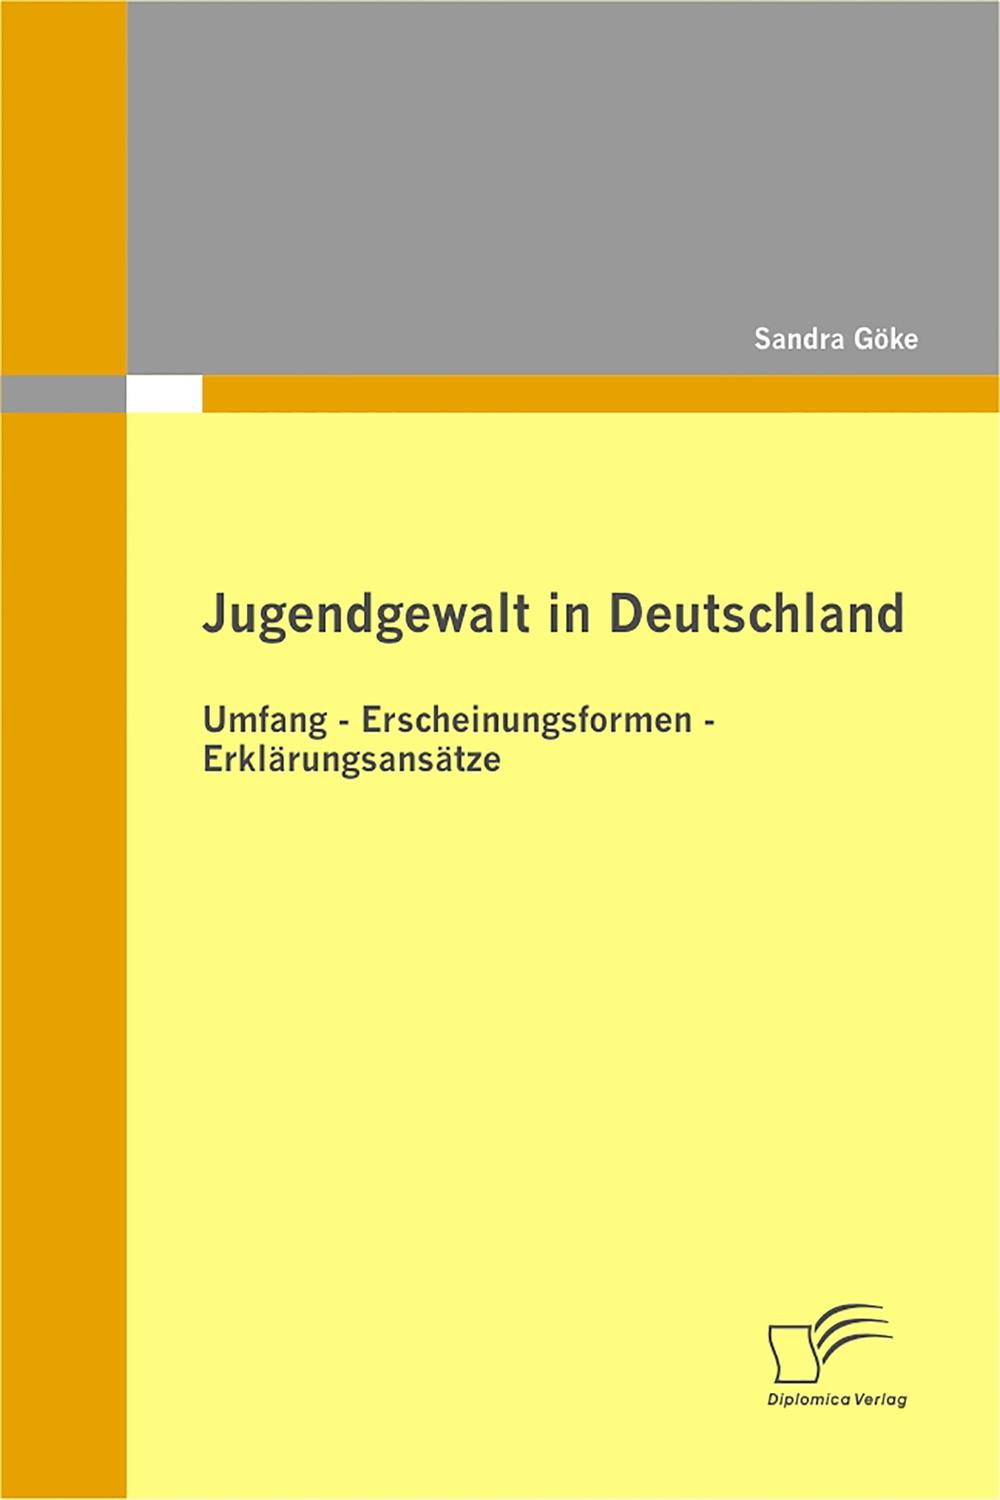 Jugendgewalt in Deutschland - Sandra Göke